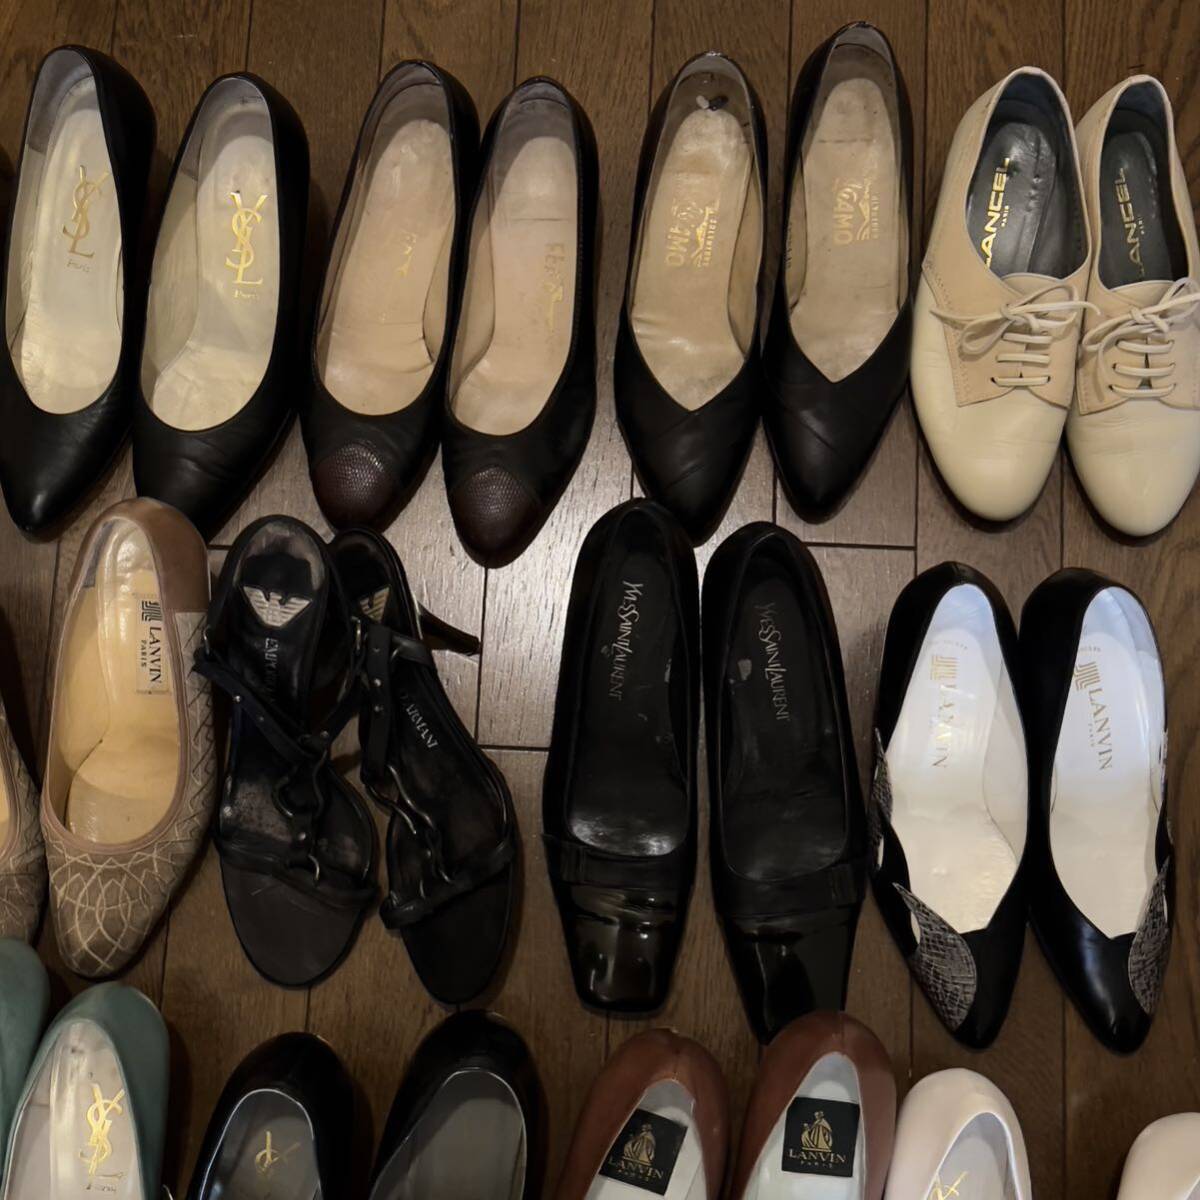 1 start set sale 30 pairs set brand shoes pumps sandals Ferragamo YSL LANVIN TORY BURCH COACH ARMANI LANCEL VALENTINO Junk 